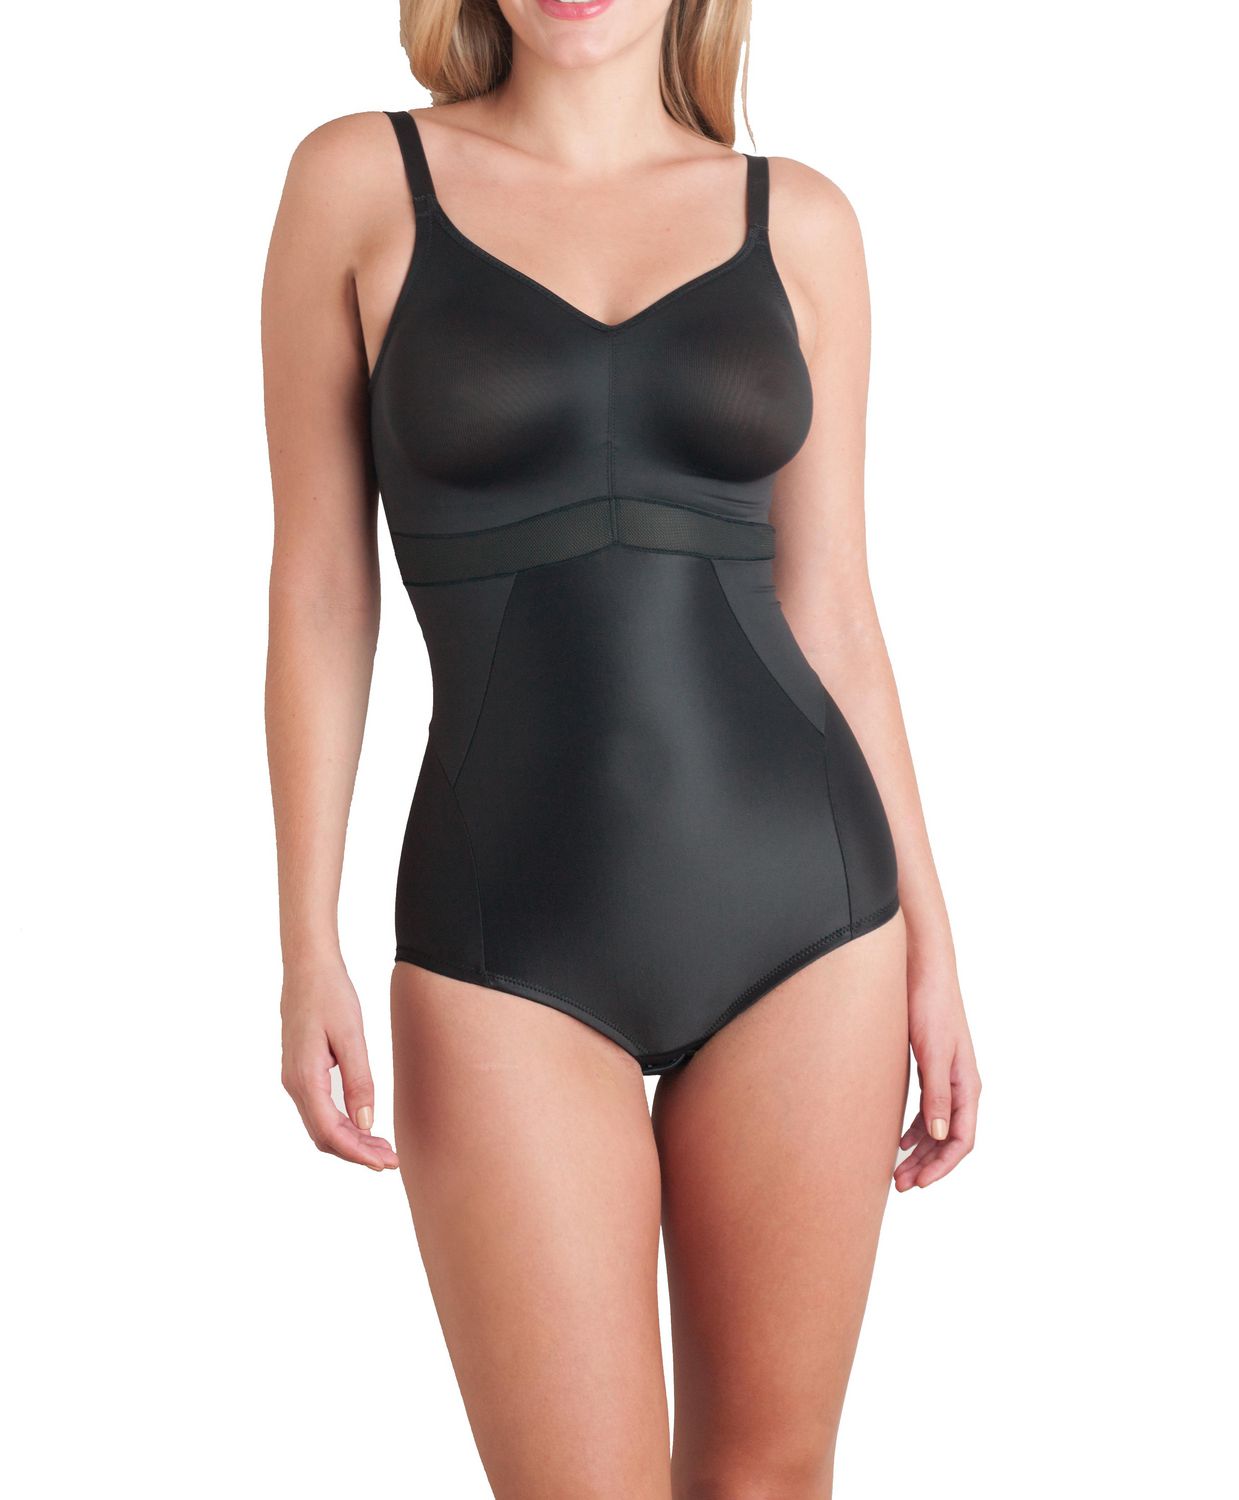 S-xxl Size Full Length Control Slips Women Shapewear Underwear Dress With  Underwire Cup Body Shapers Black Beige Gray